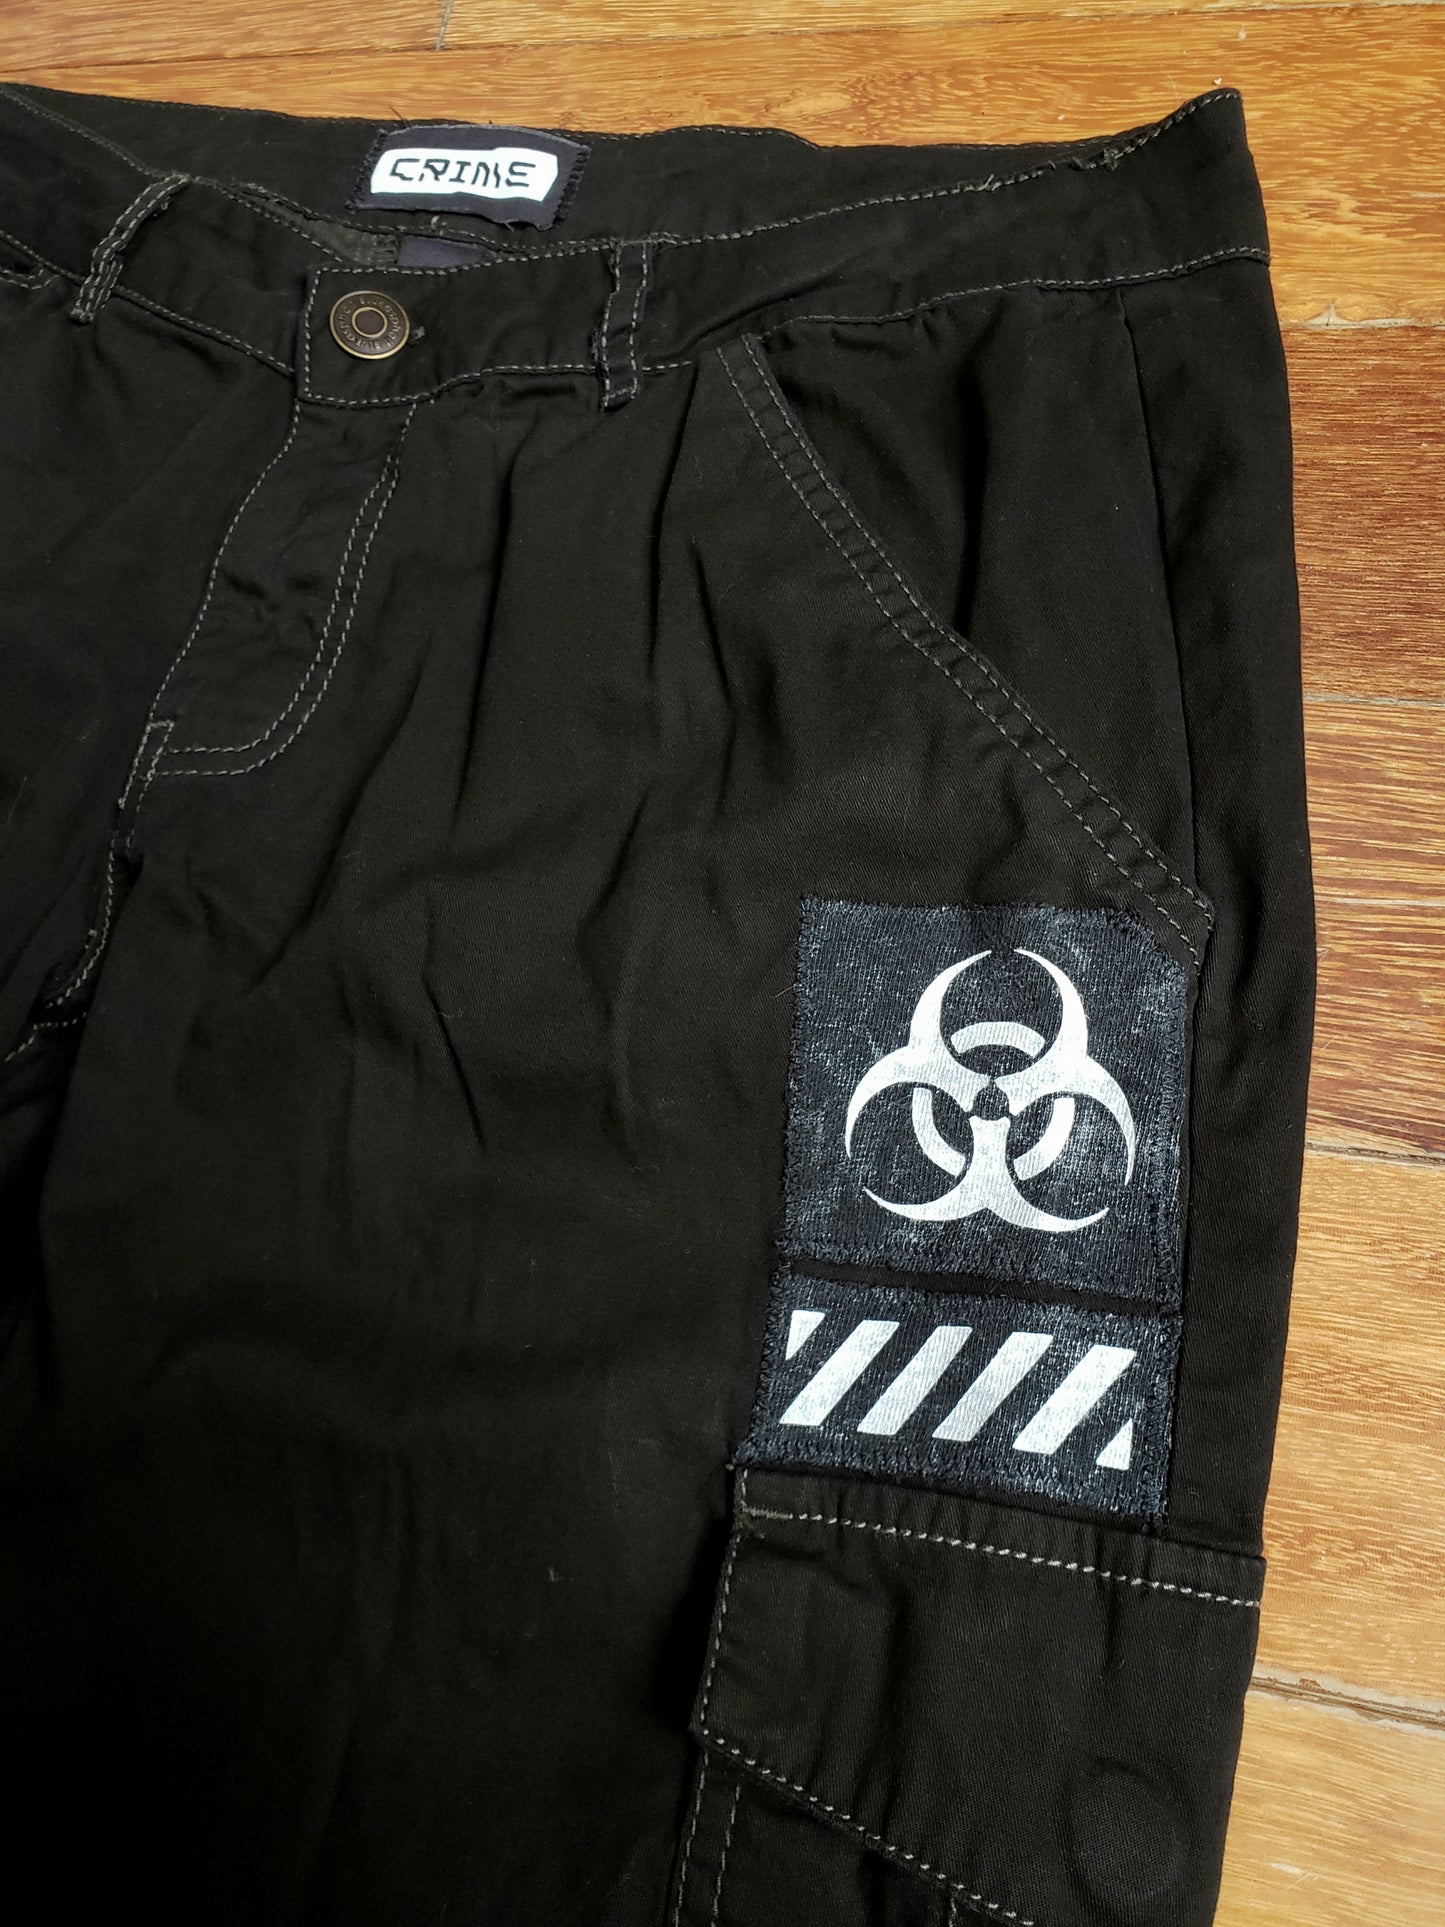 biohazard black cargo PANTS- L -